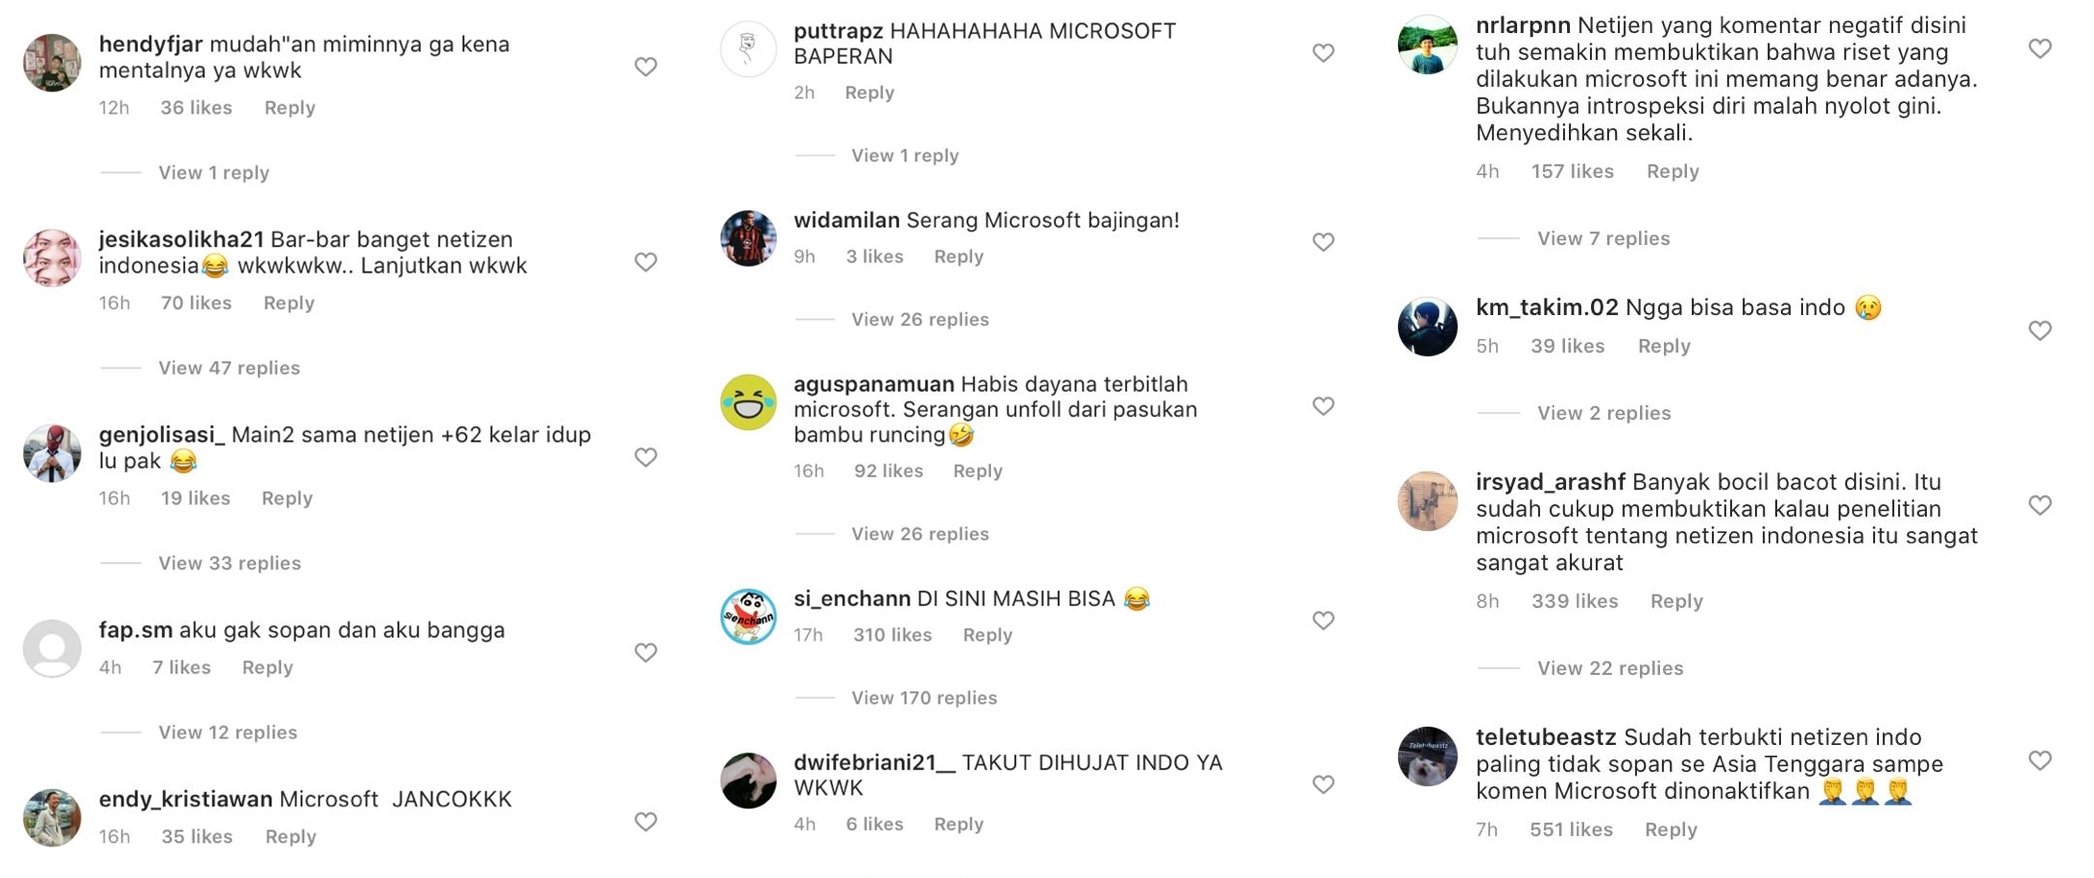 Warganet Indonesia Disebut Paling Nggak Sopan, Akun Microsoft Diserang. Sampai Tutup Komentar!